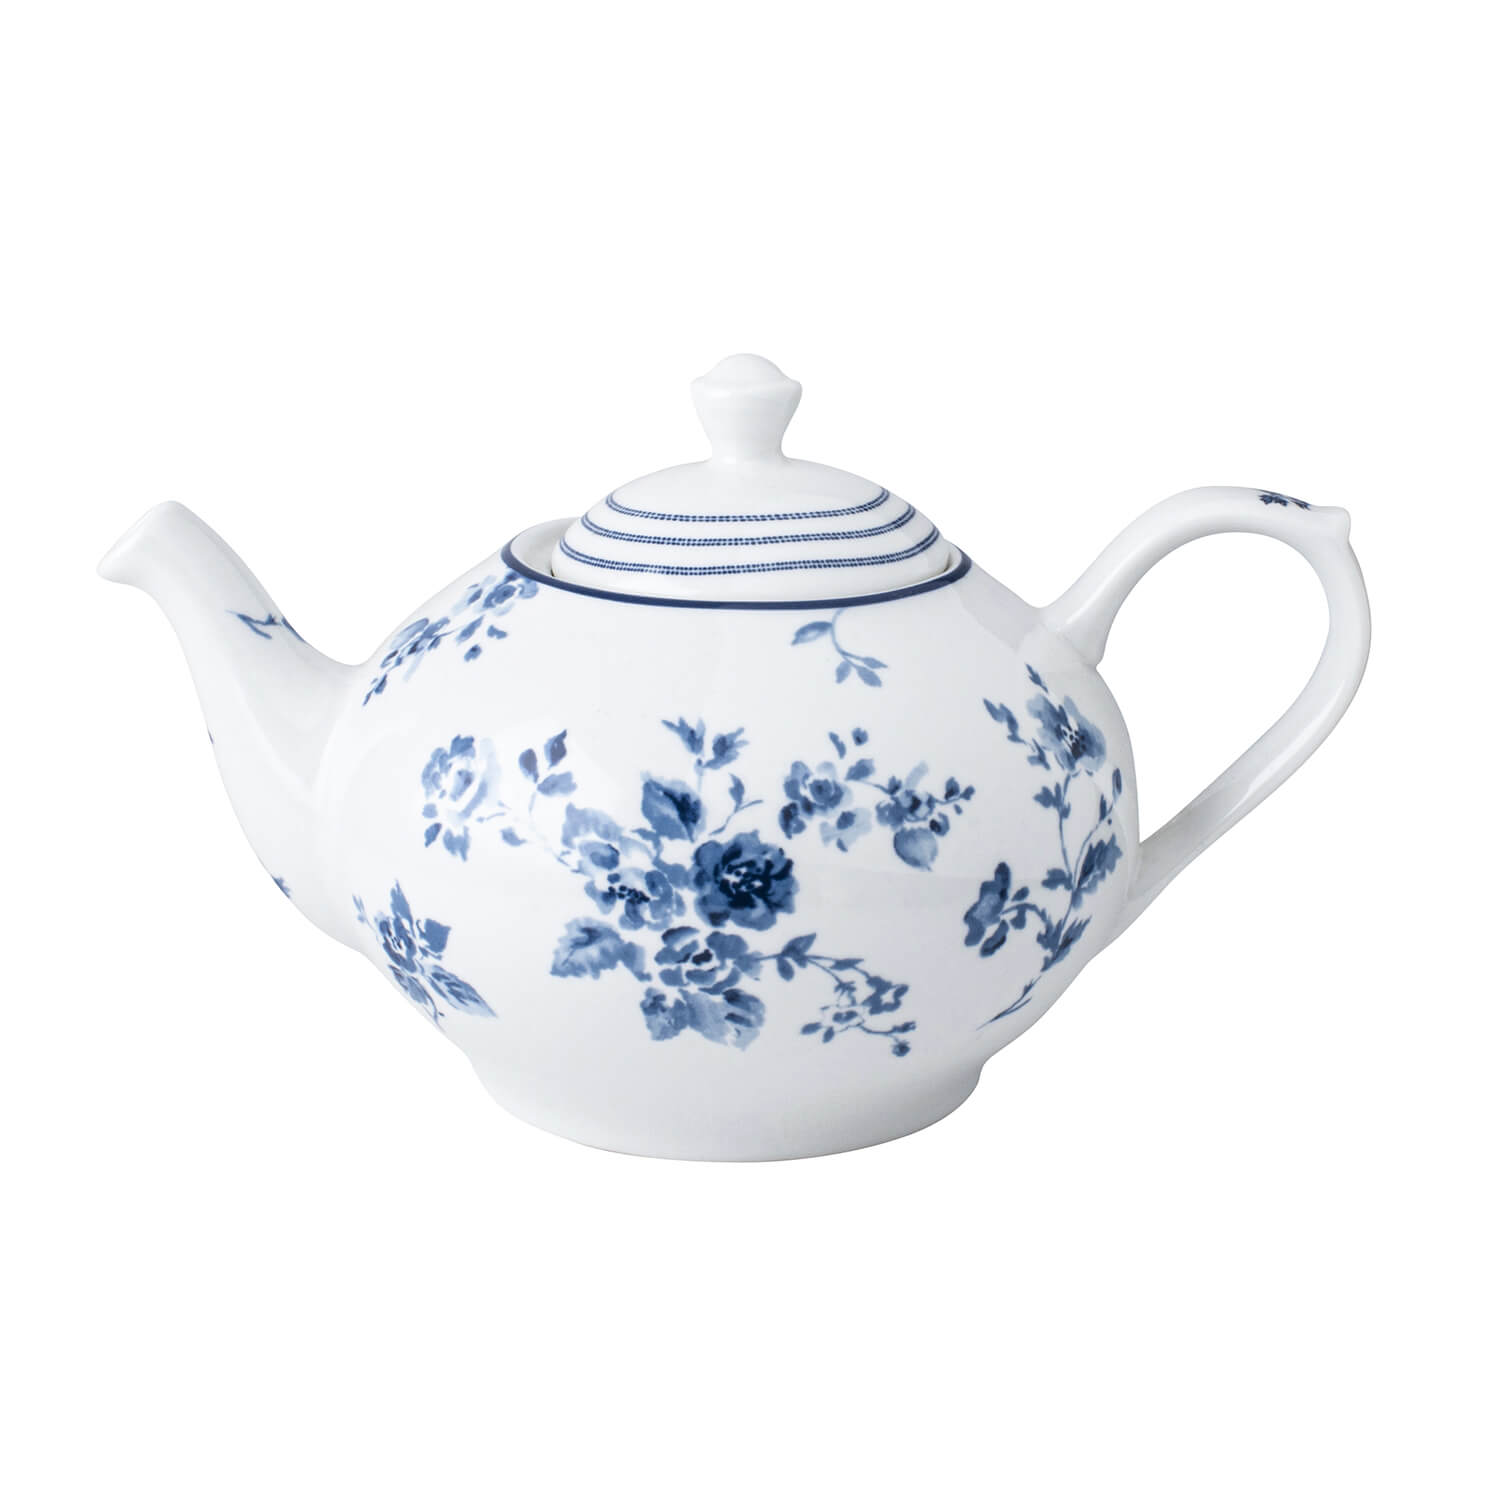 Laura Ashley Blueprint Collectables Teapot - 1.6L 3 Shaws Department Stores